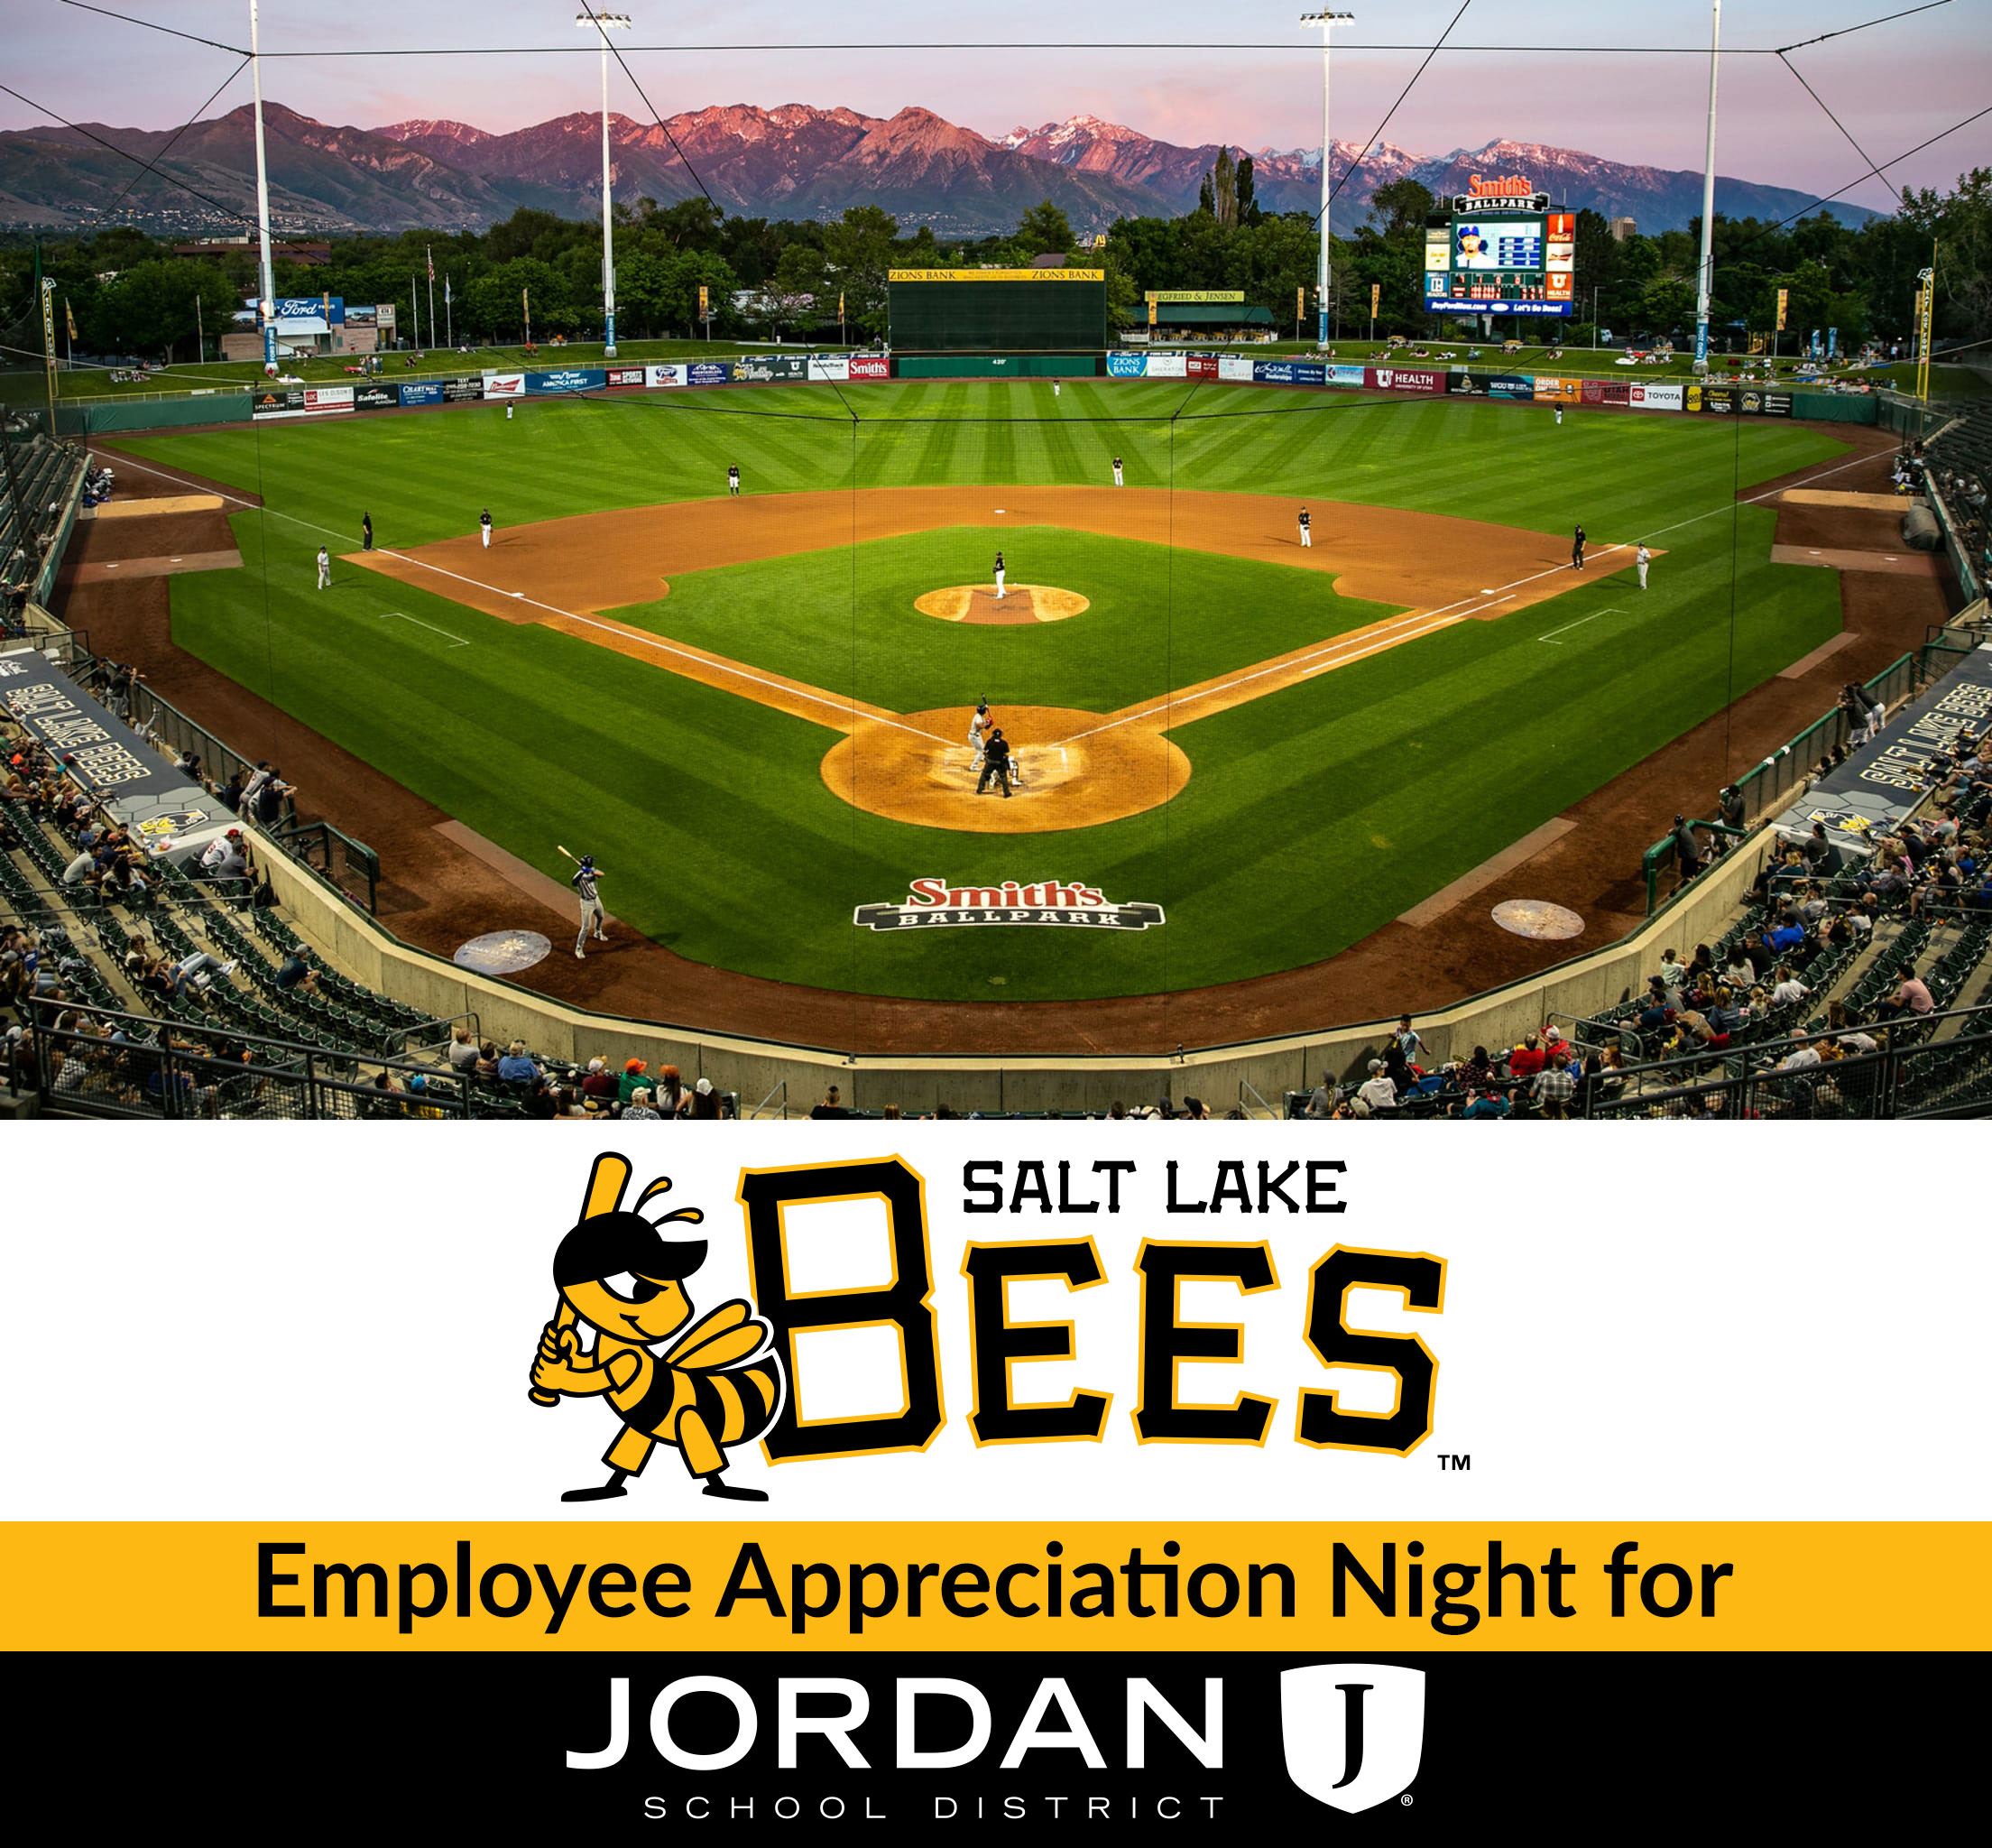 Salt Lake Bees Employee Appreciation Night for Jordan School District